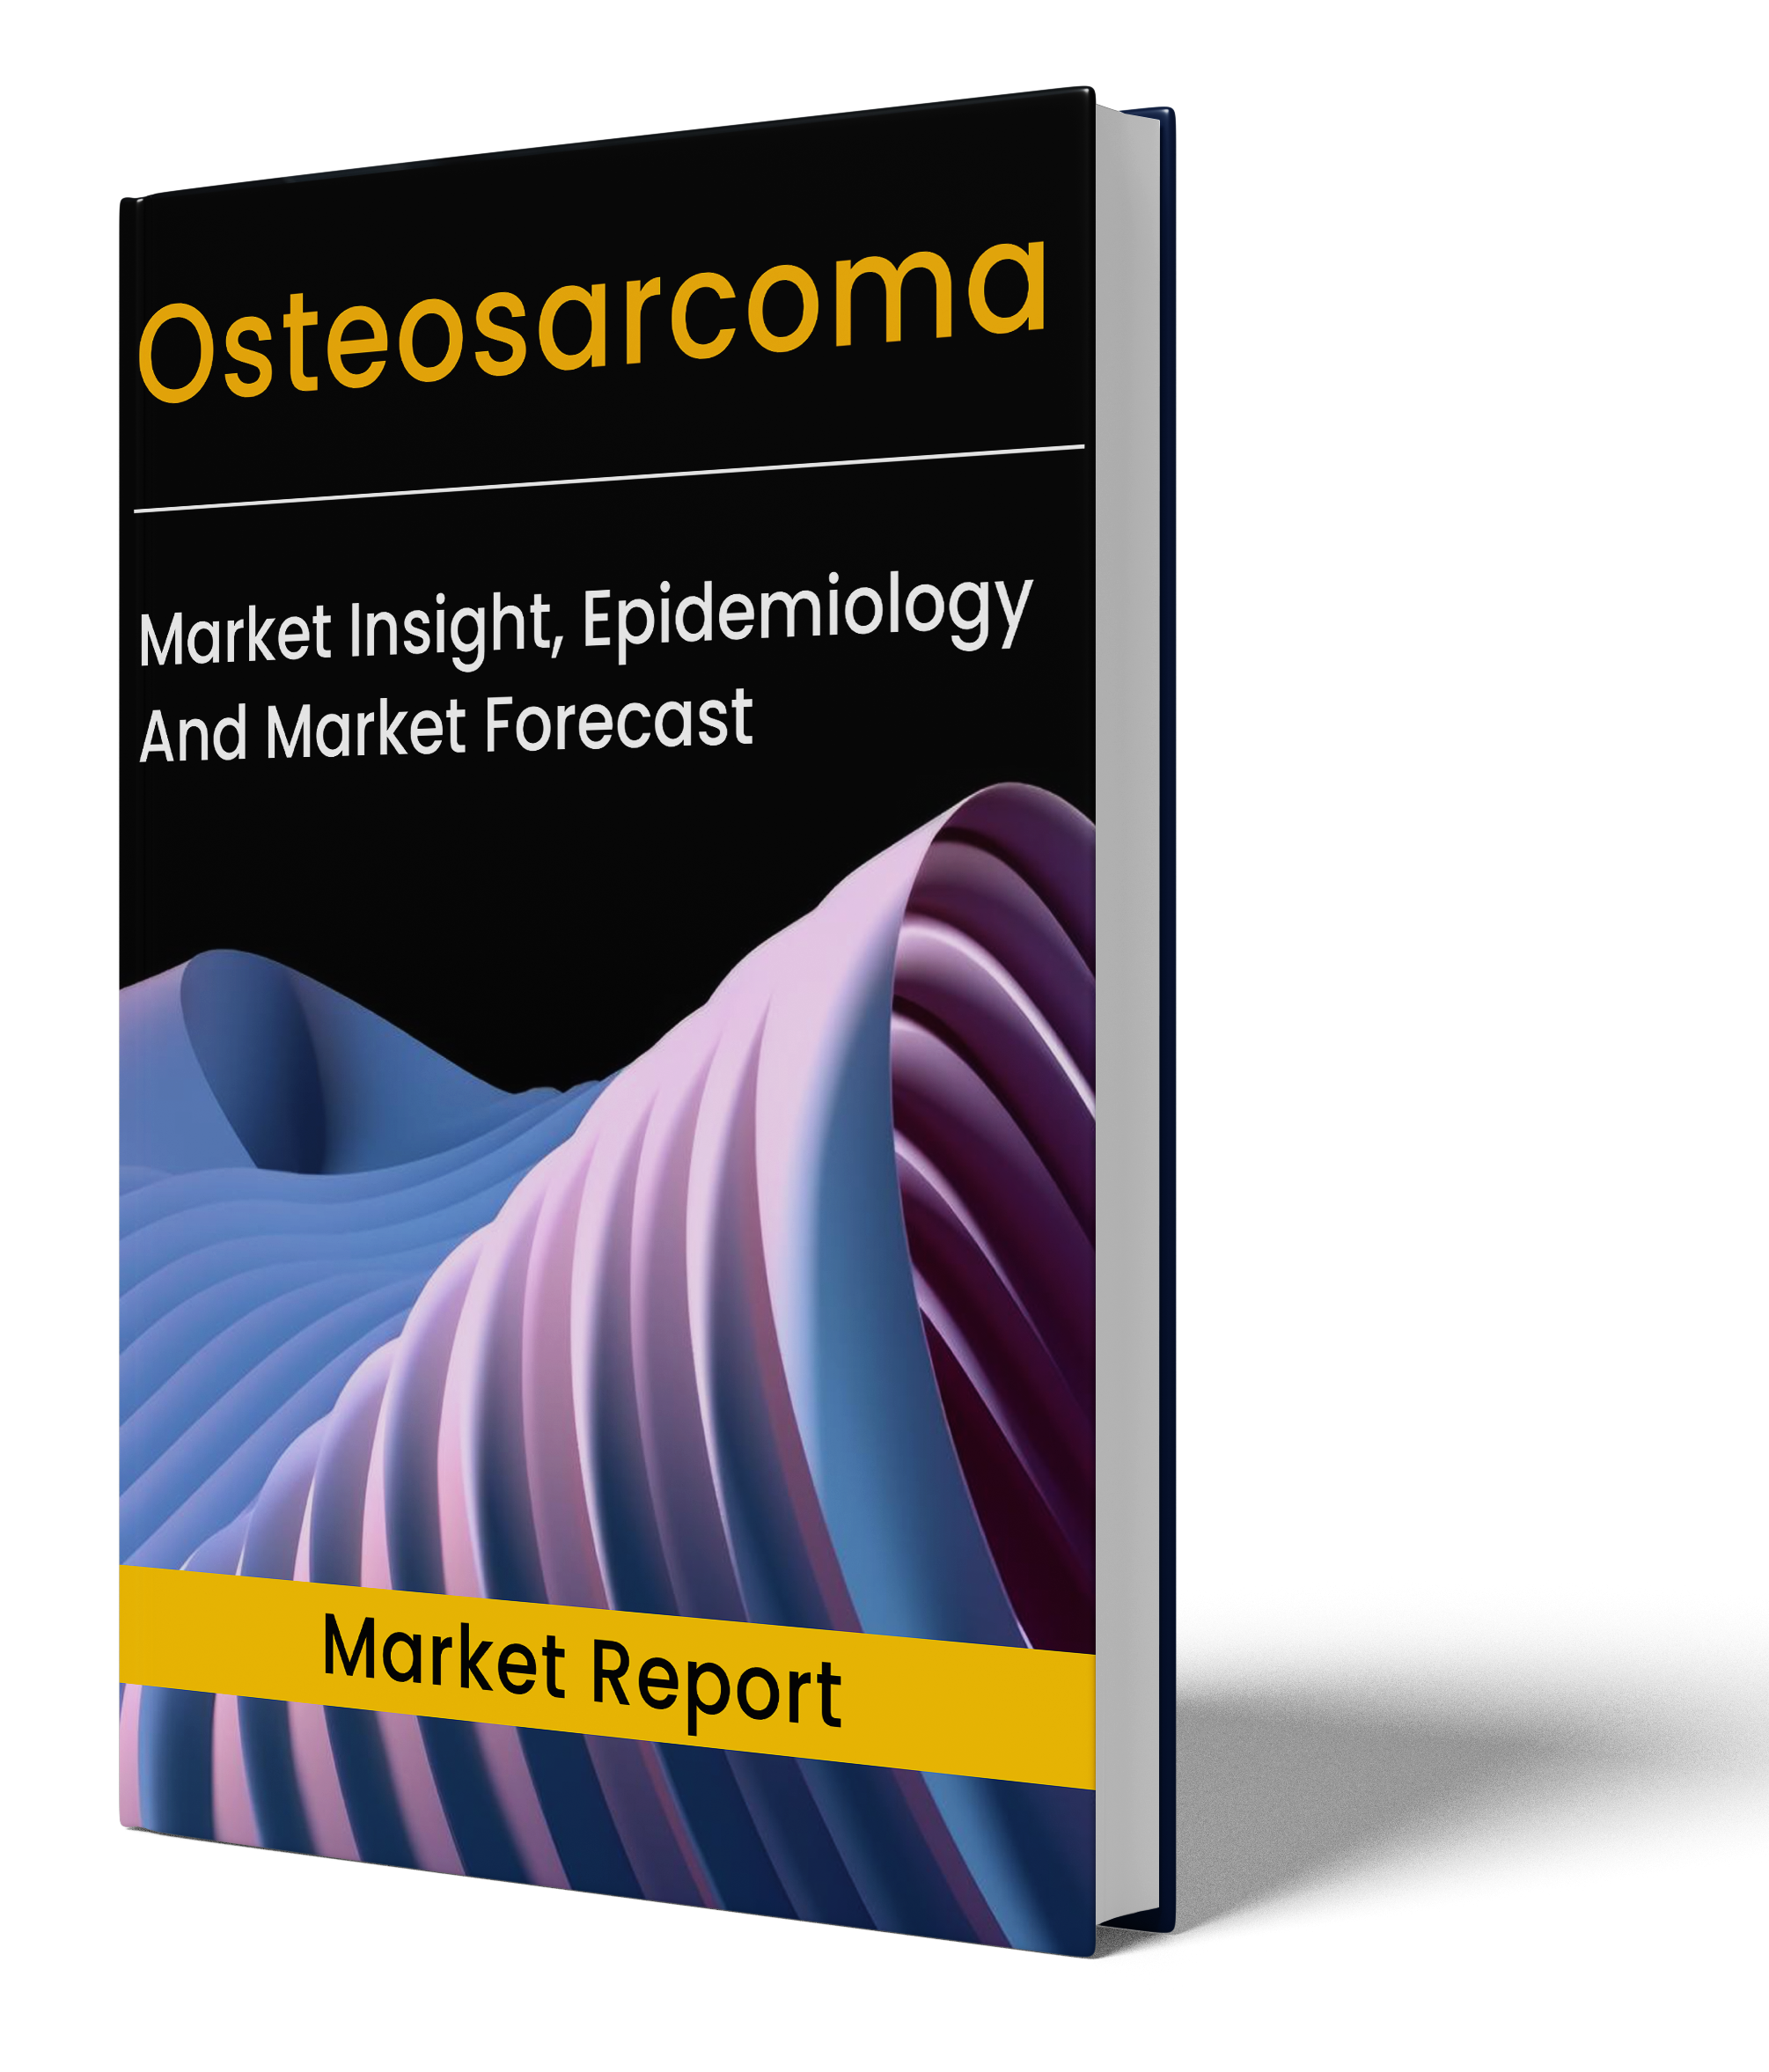 Osteosarcoma market report